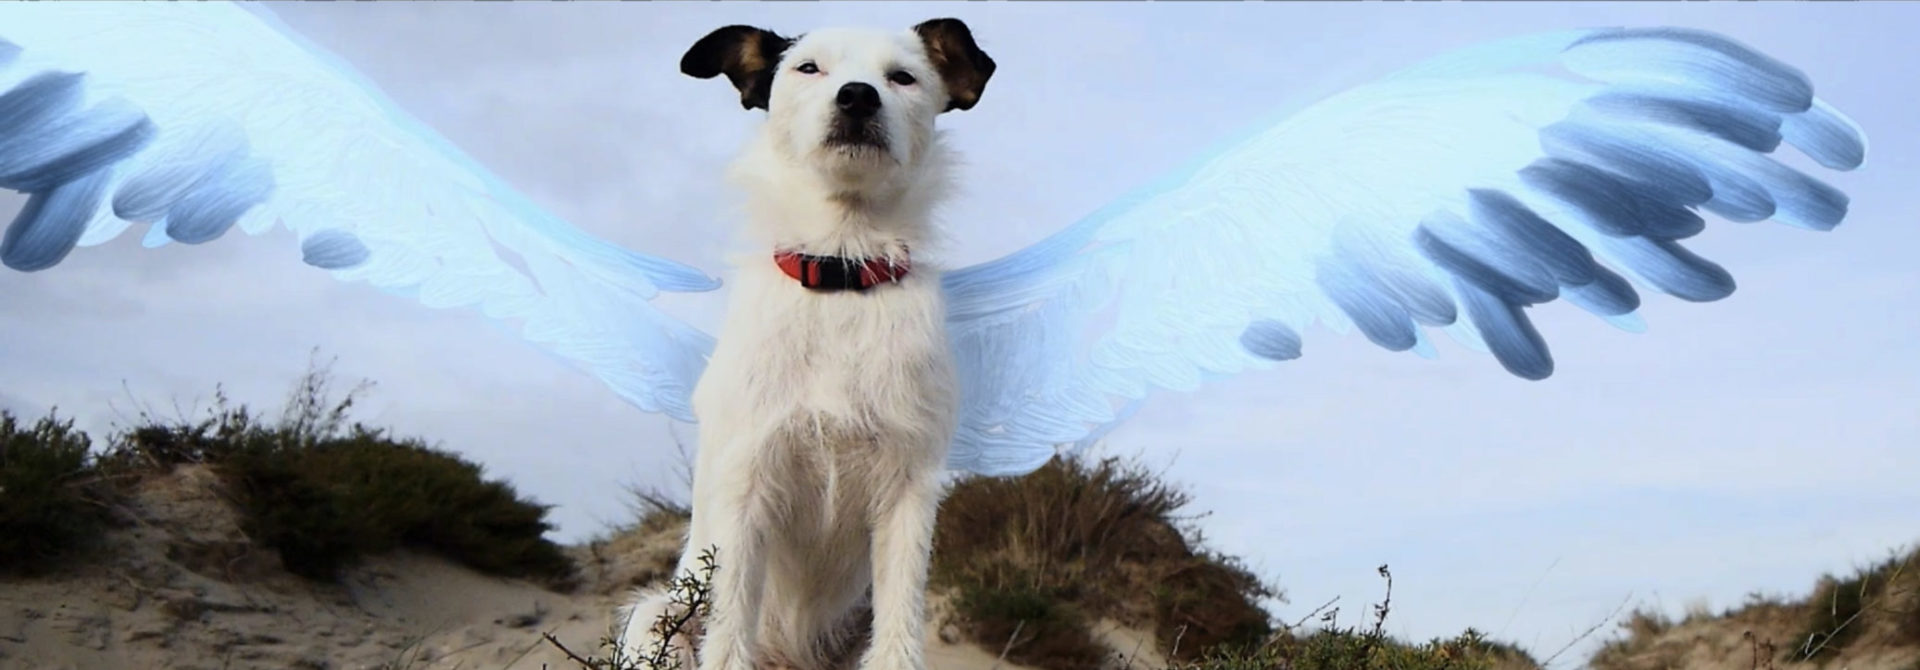 film still vliegend hond chayka met getekende vleugels